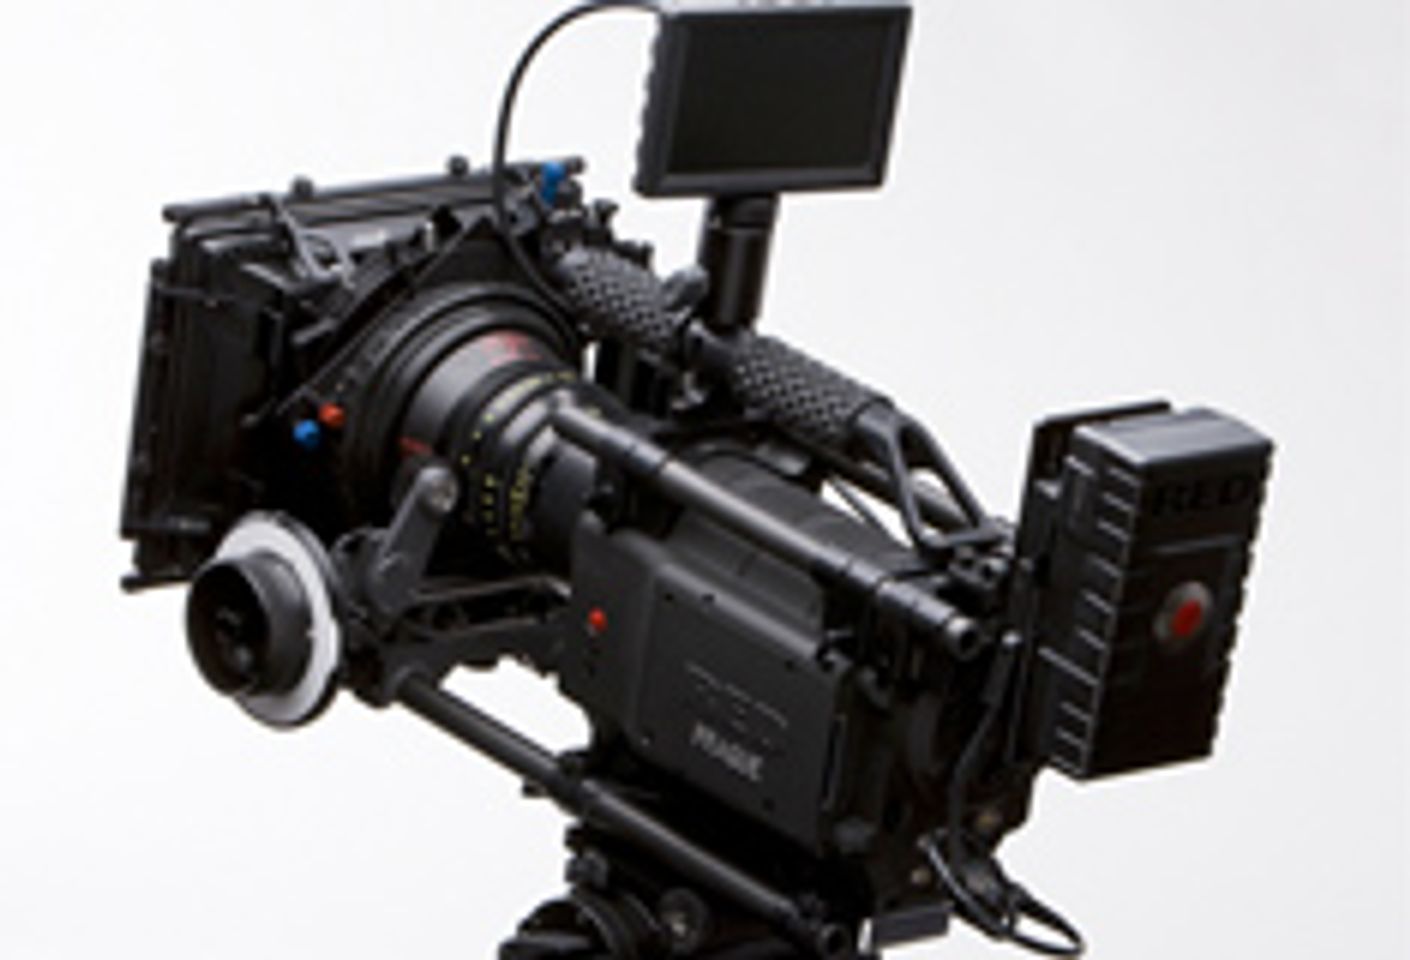 Copper Digital Acquires Red One Camera